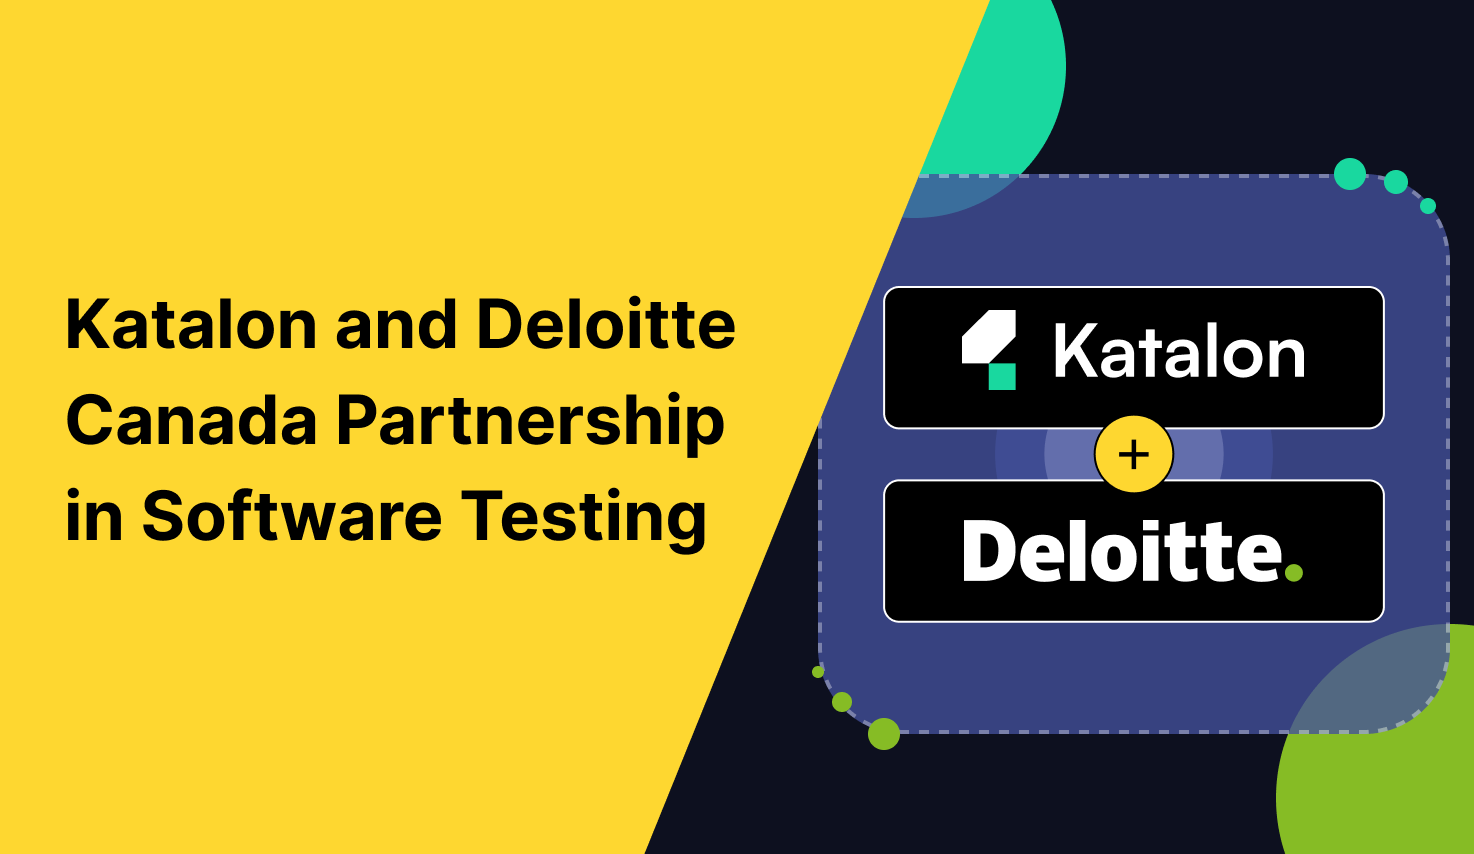 Katalon and Deloitte Canada Partnership in Software Testing